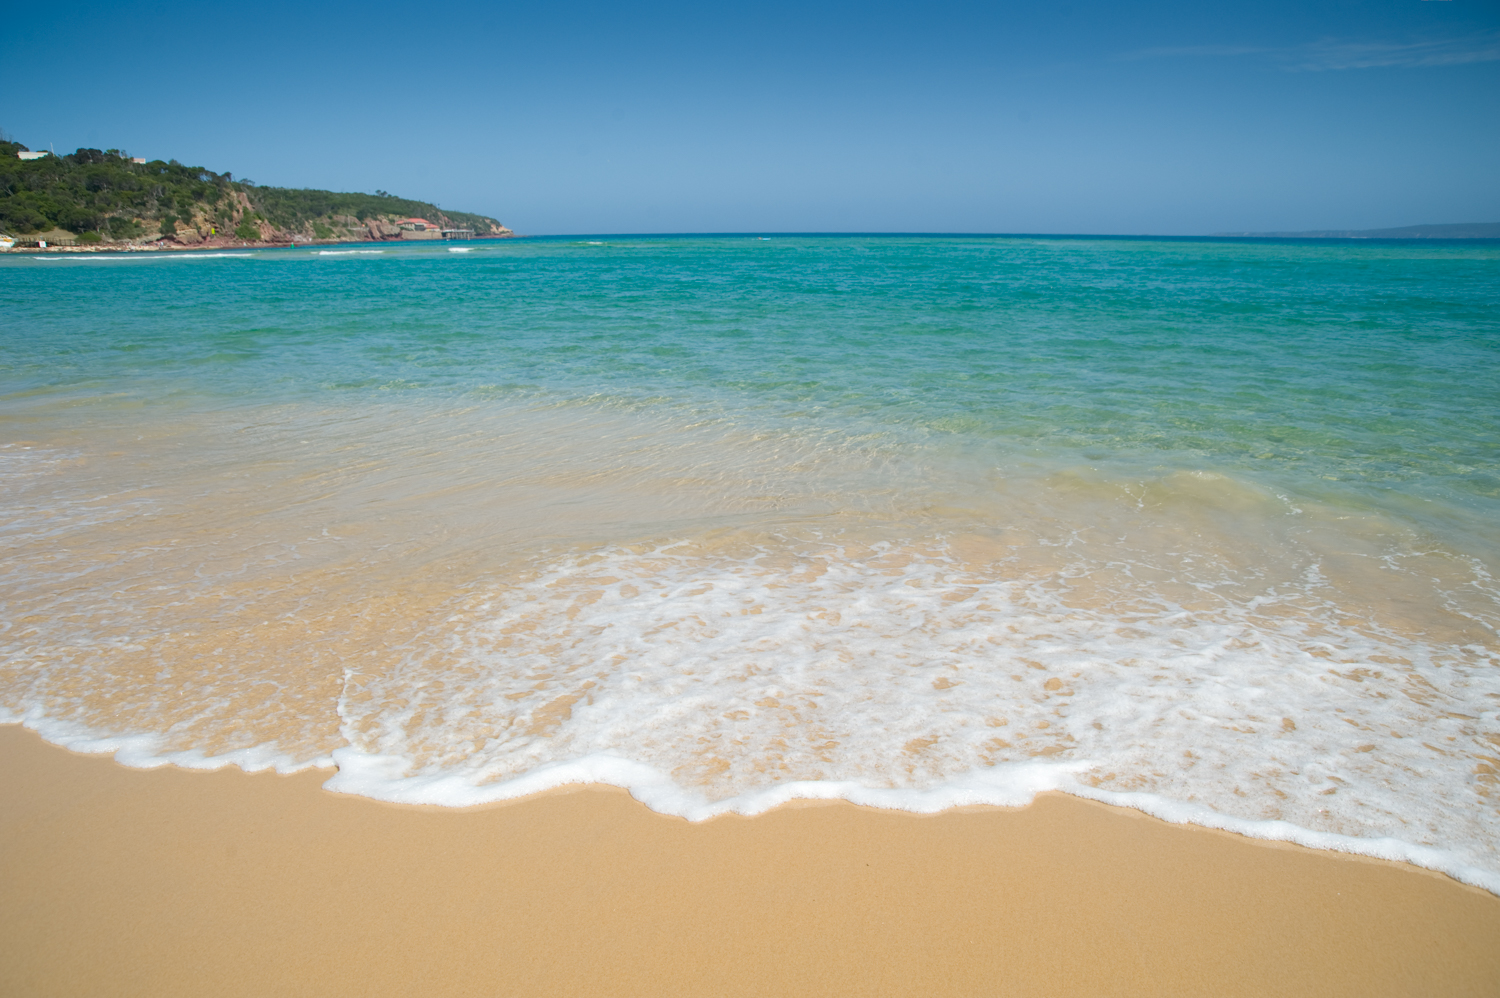 Beautiful clear sea water at the beach in Merimbula, Sapphire Coast, New South Wales.